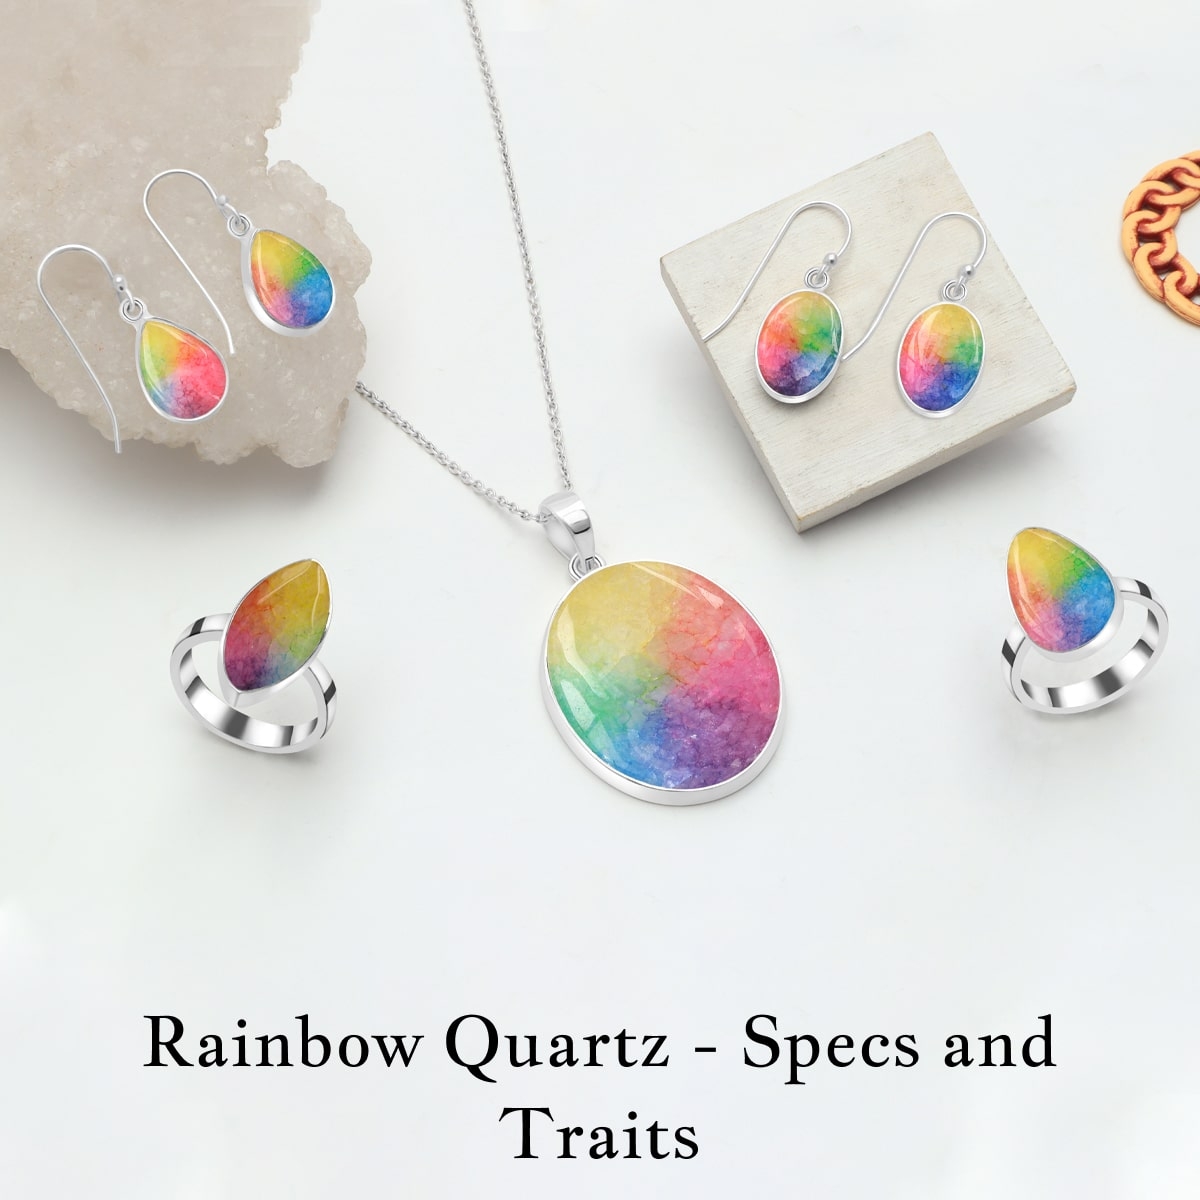 Specifications & Characteristics of Rainbow Quartz